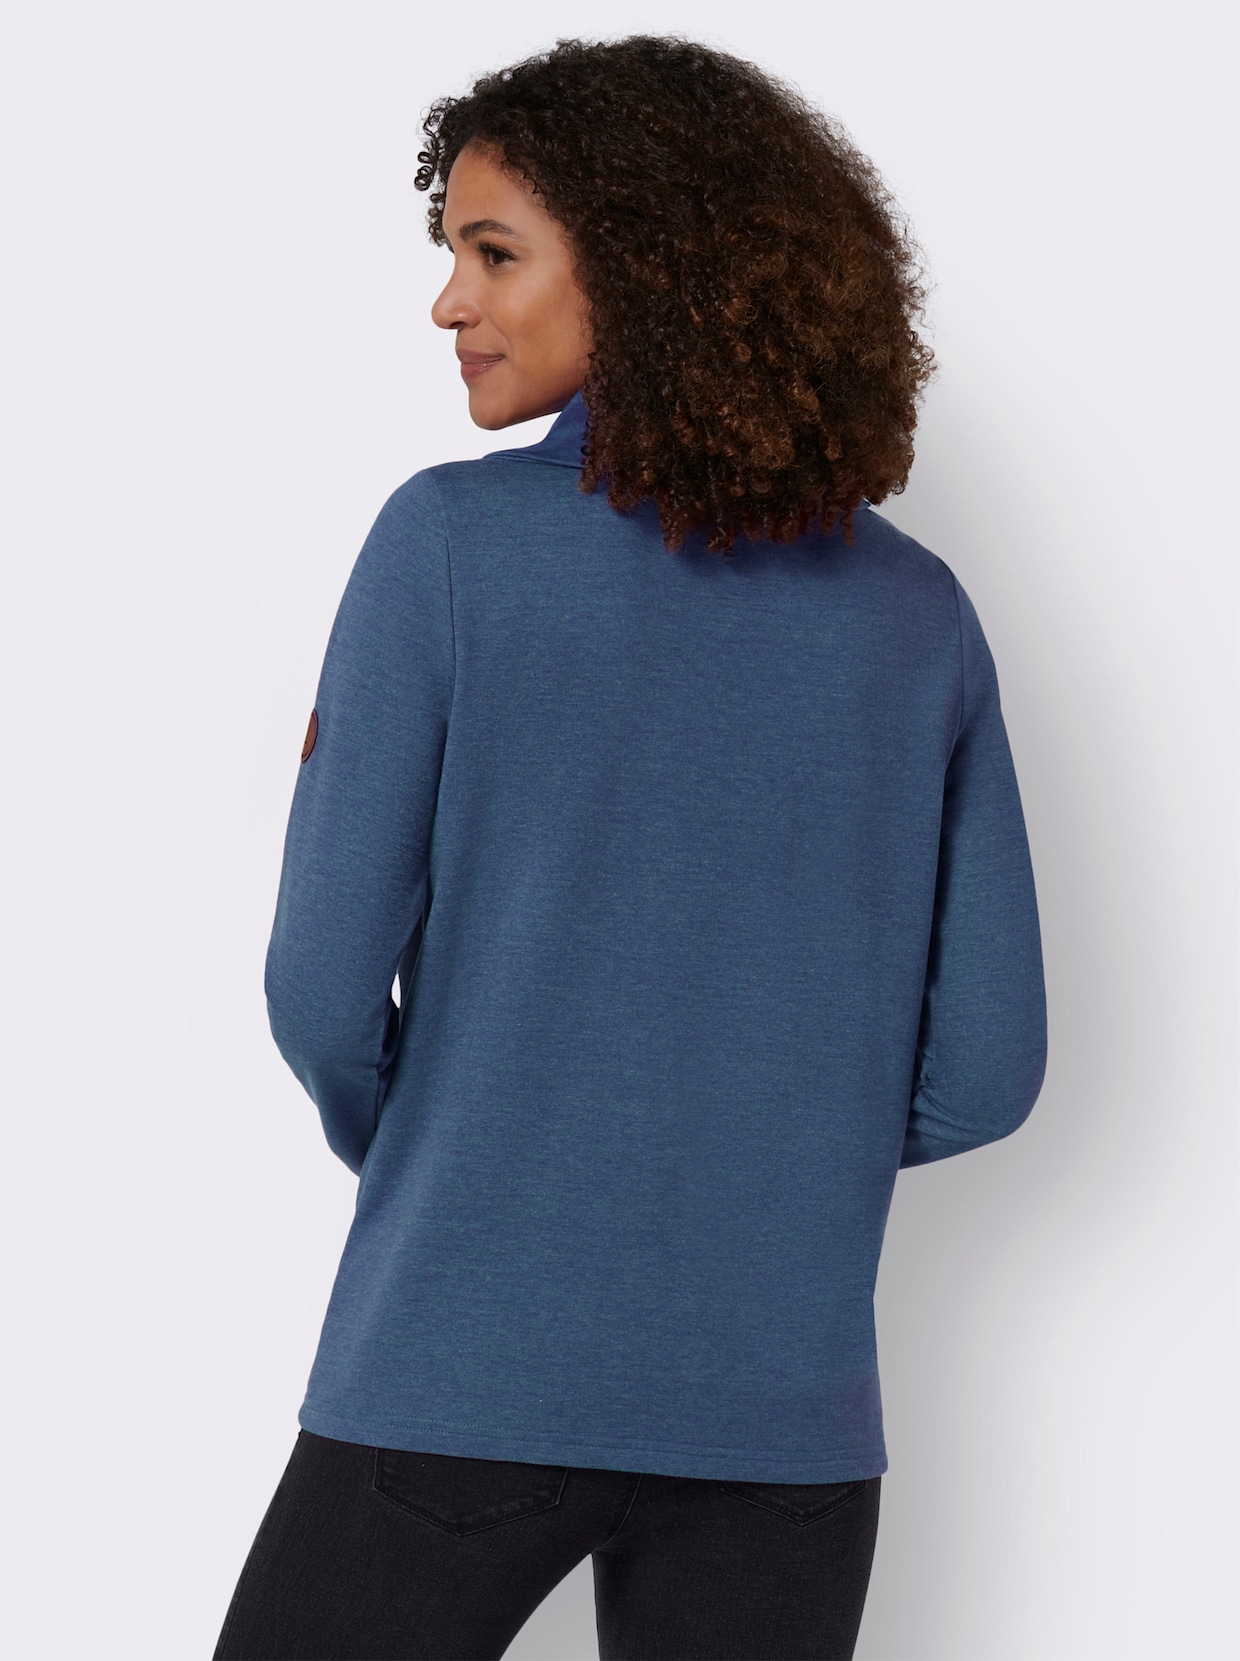 Sweatshirt - jeansblau-weiß-meliert